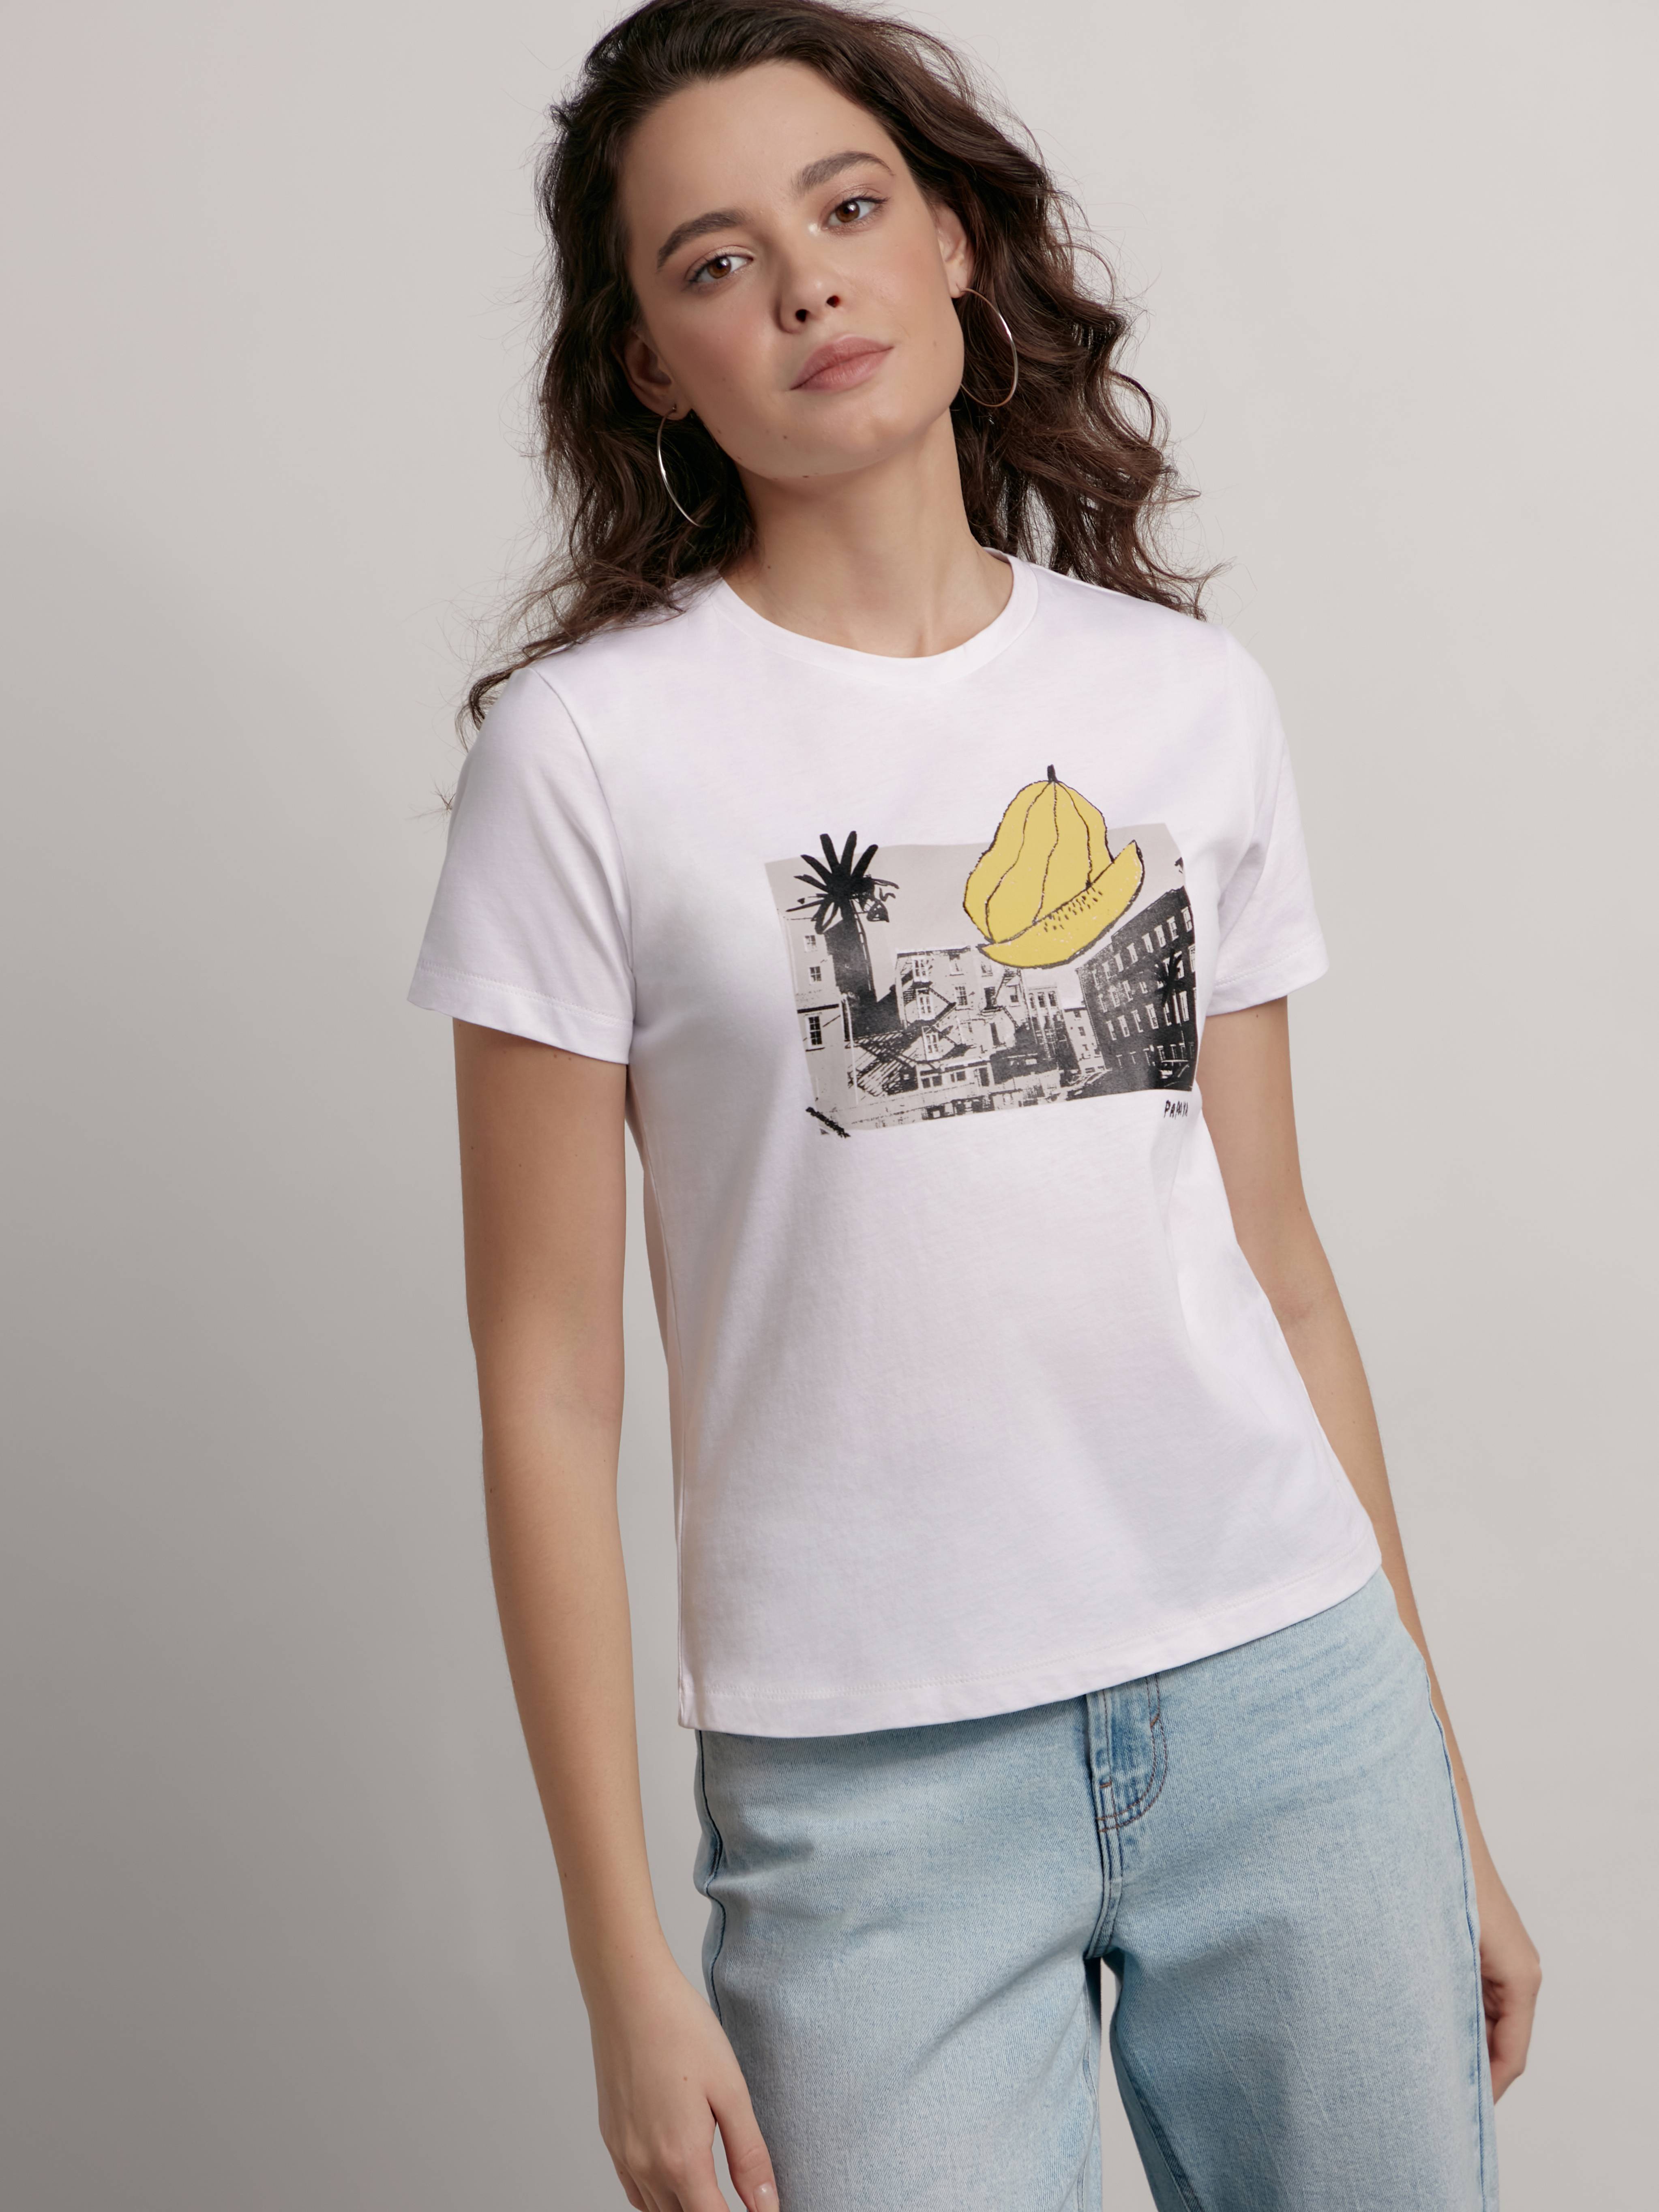 Базовая футболка из хлопка с рисунком «Papaya» LD 2131 Conte ⭐️, цвет white, размер 170-100/xl - фото 1